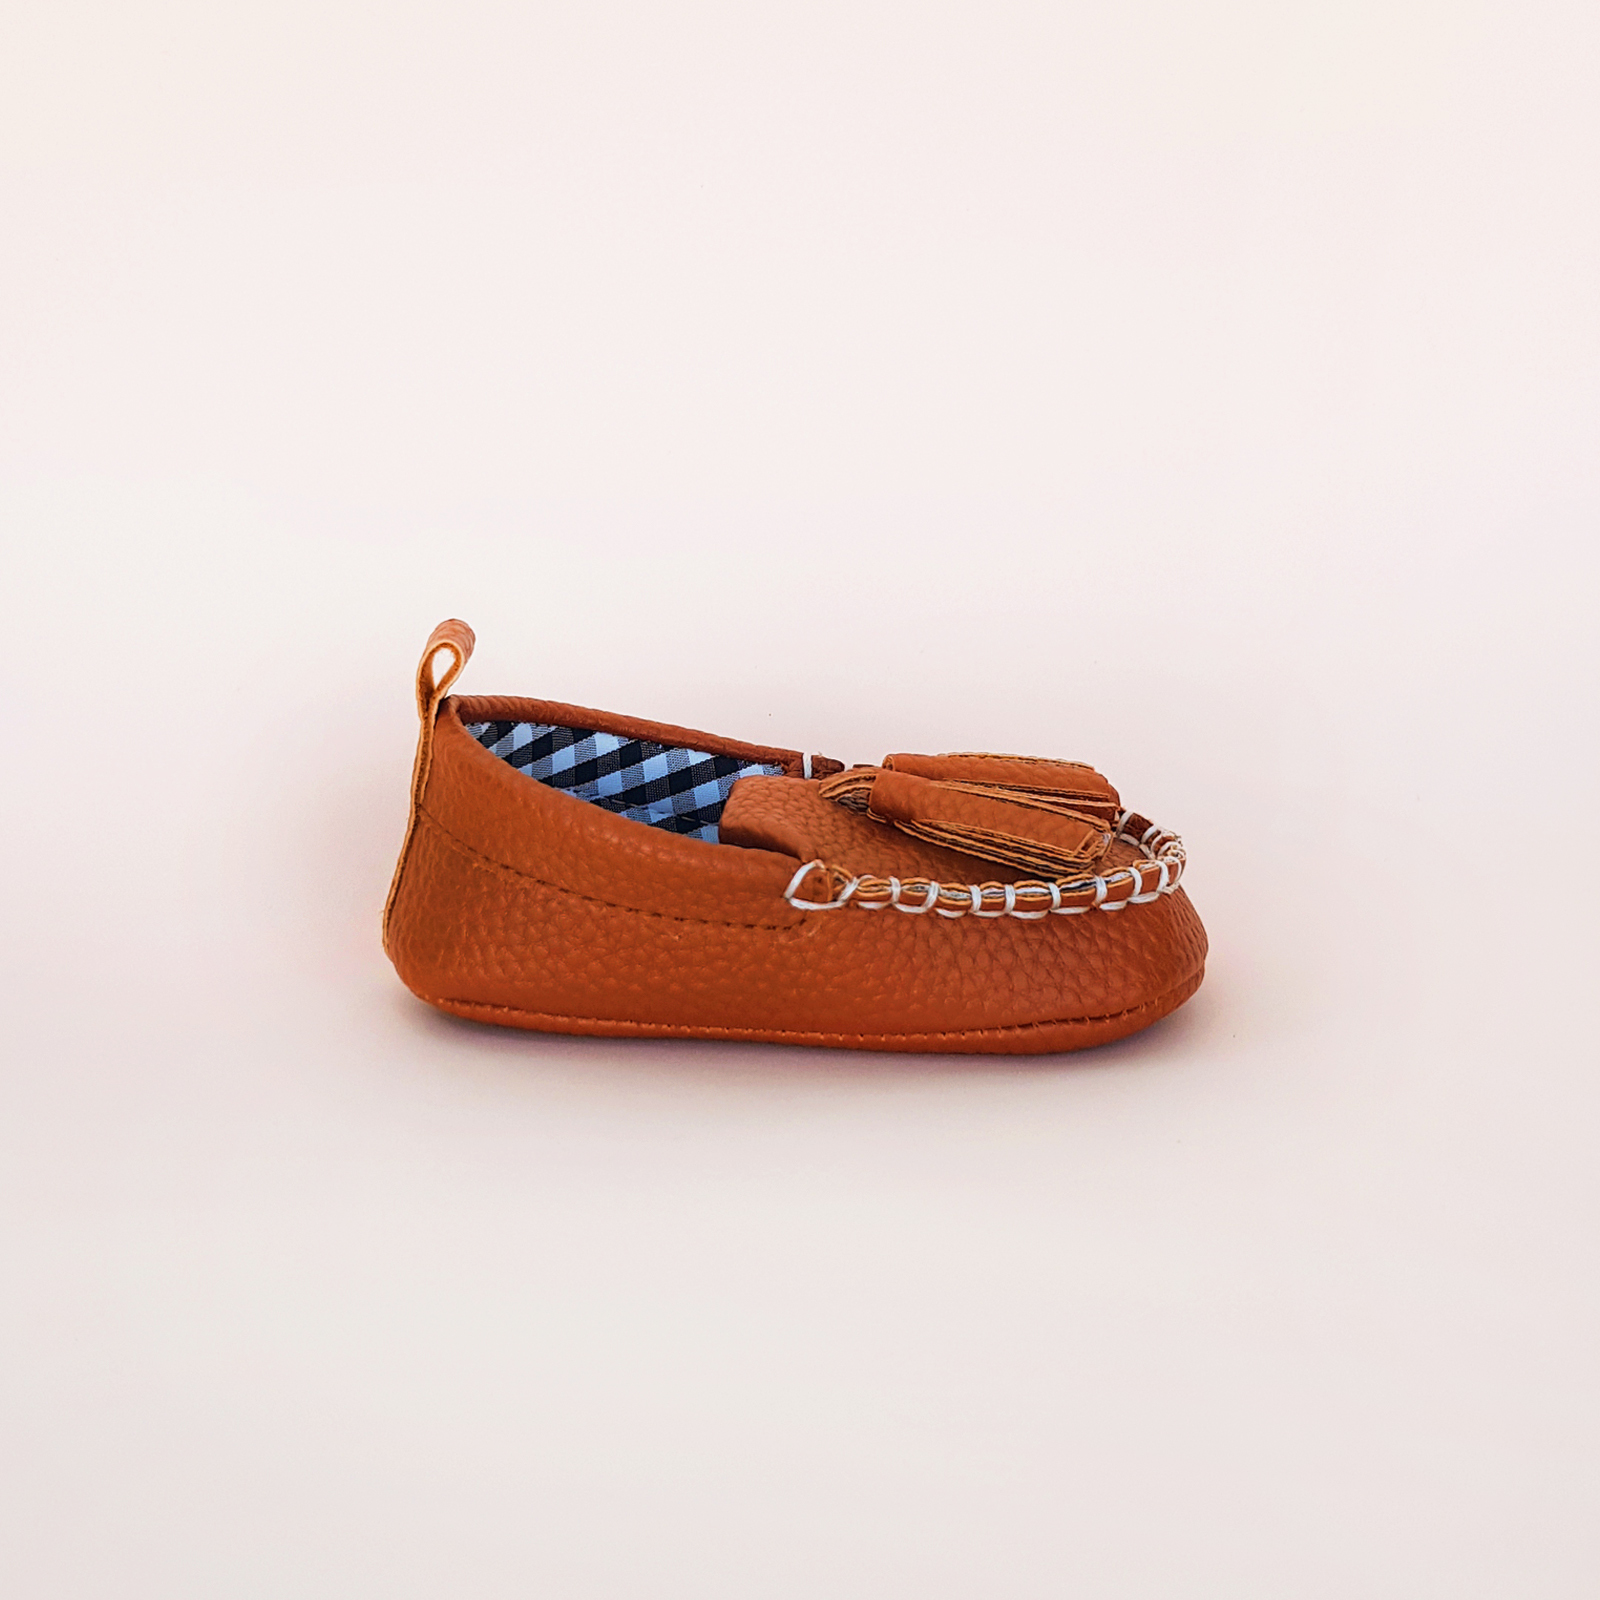 Mr Brown Shoes1600x1600-2.jpg